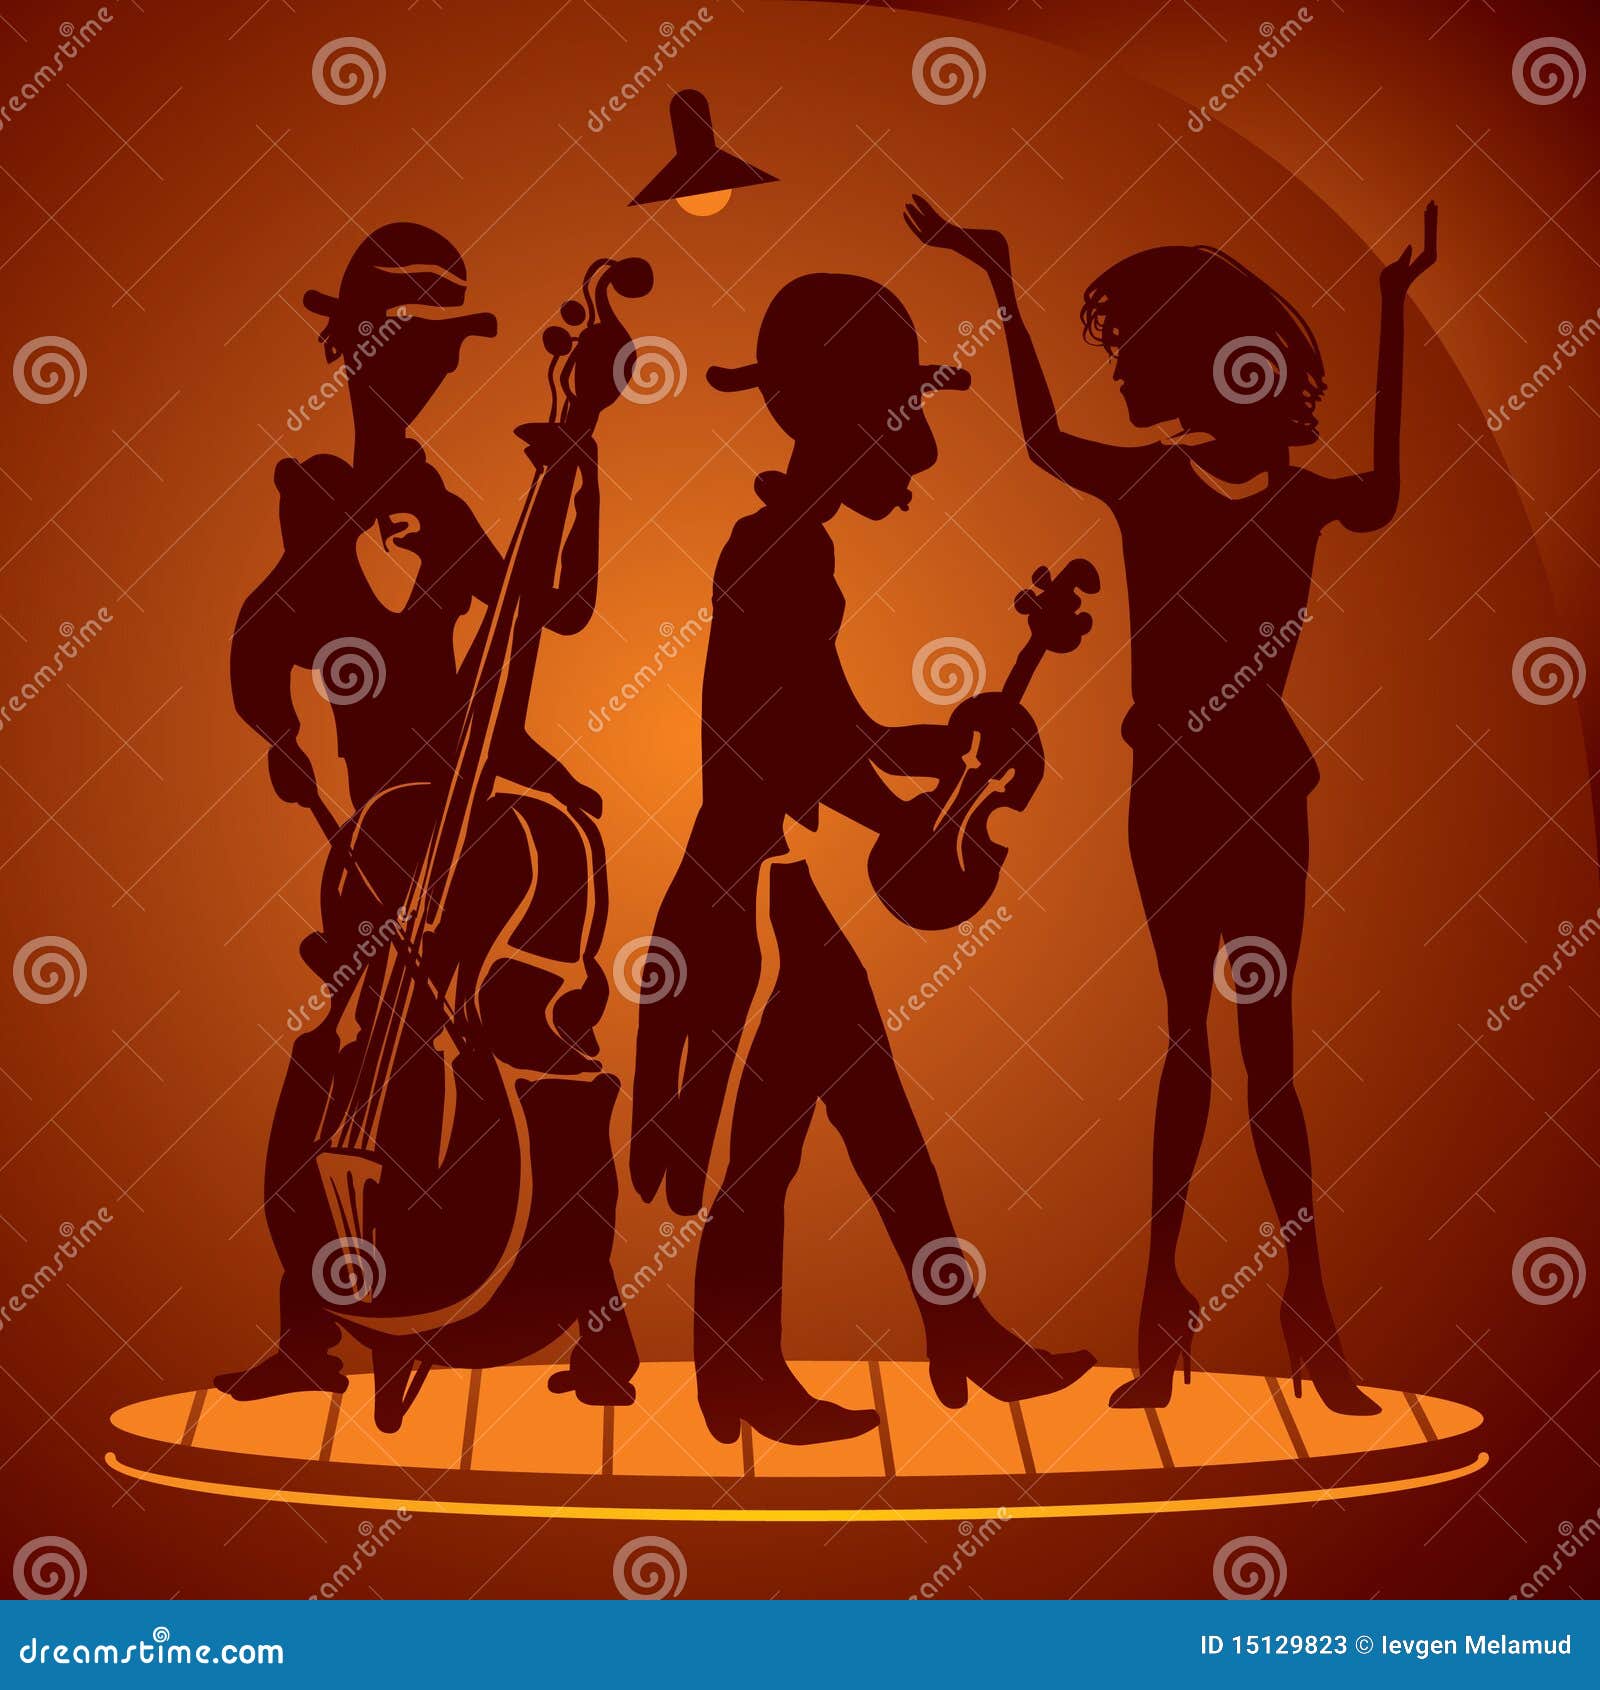 musicians on a cabaret scene